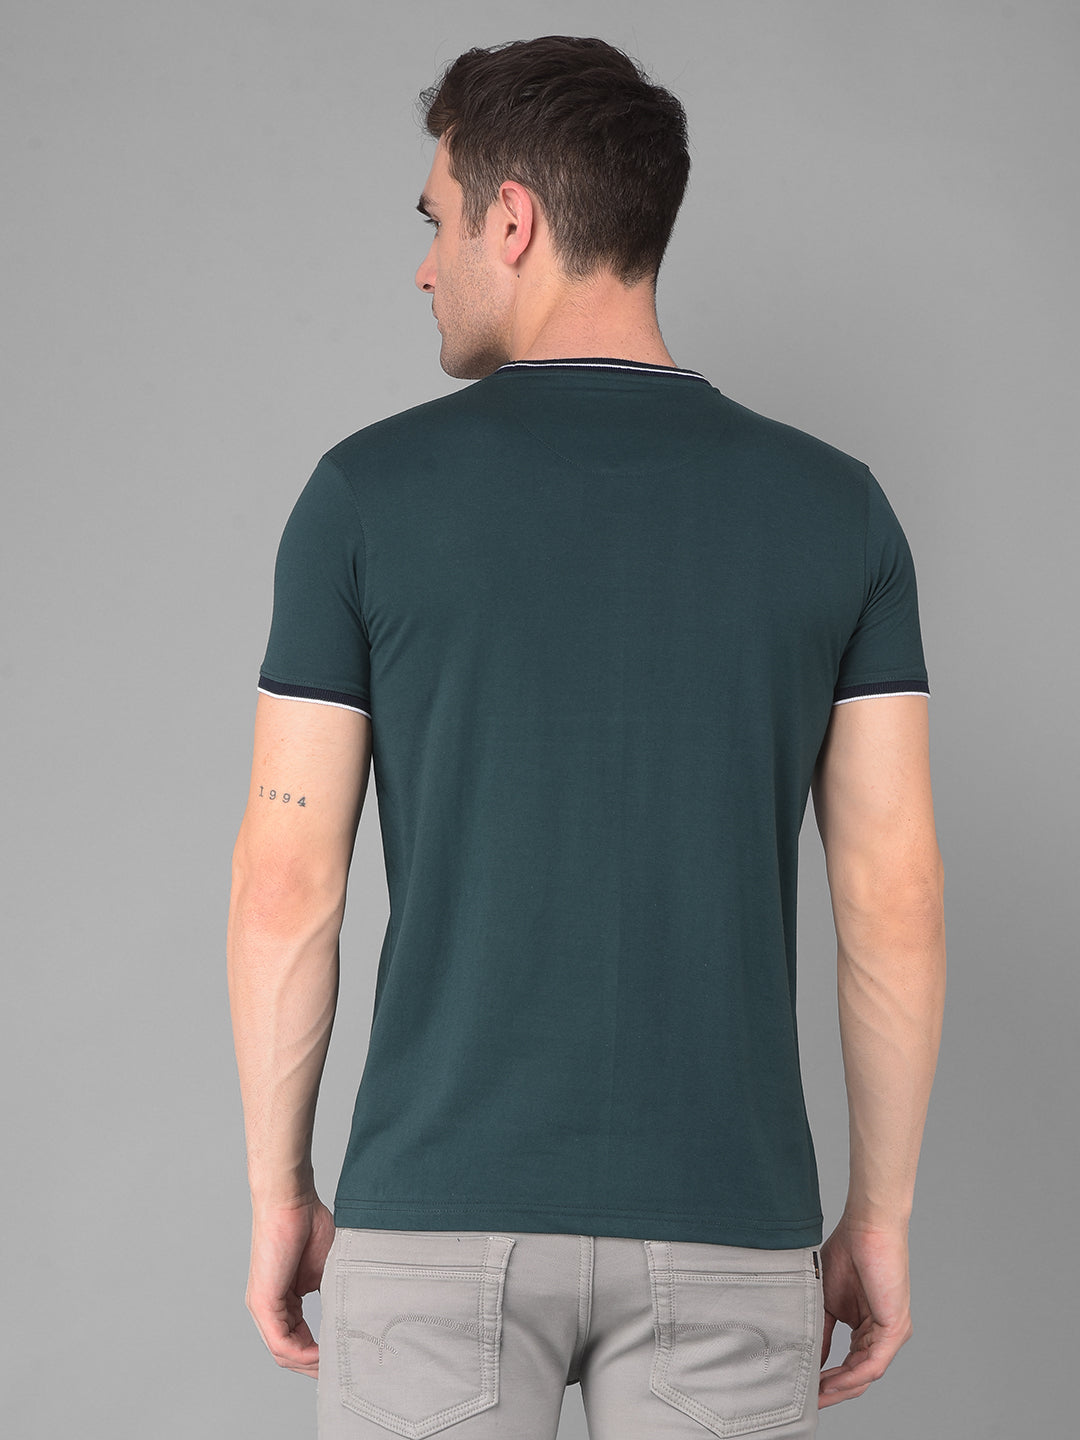 cobb solid sacramento green round neck t-shirt